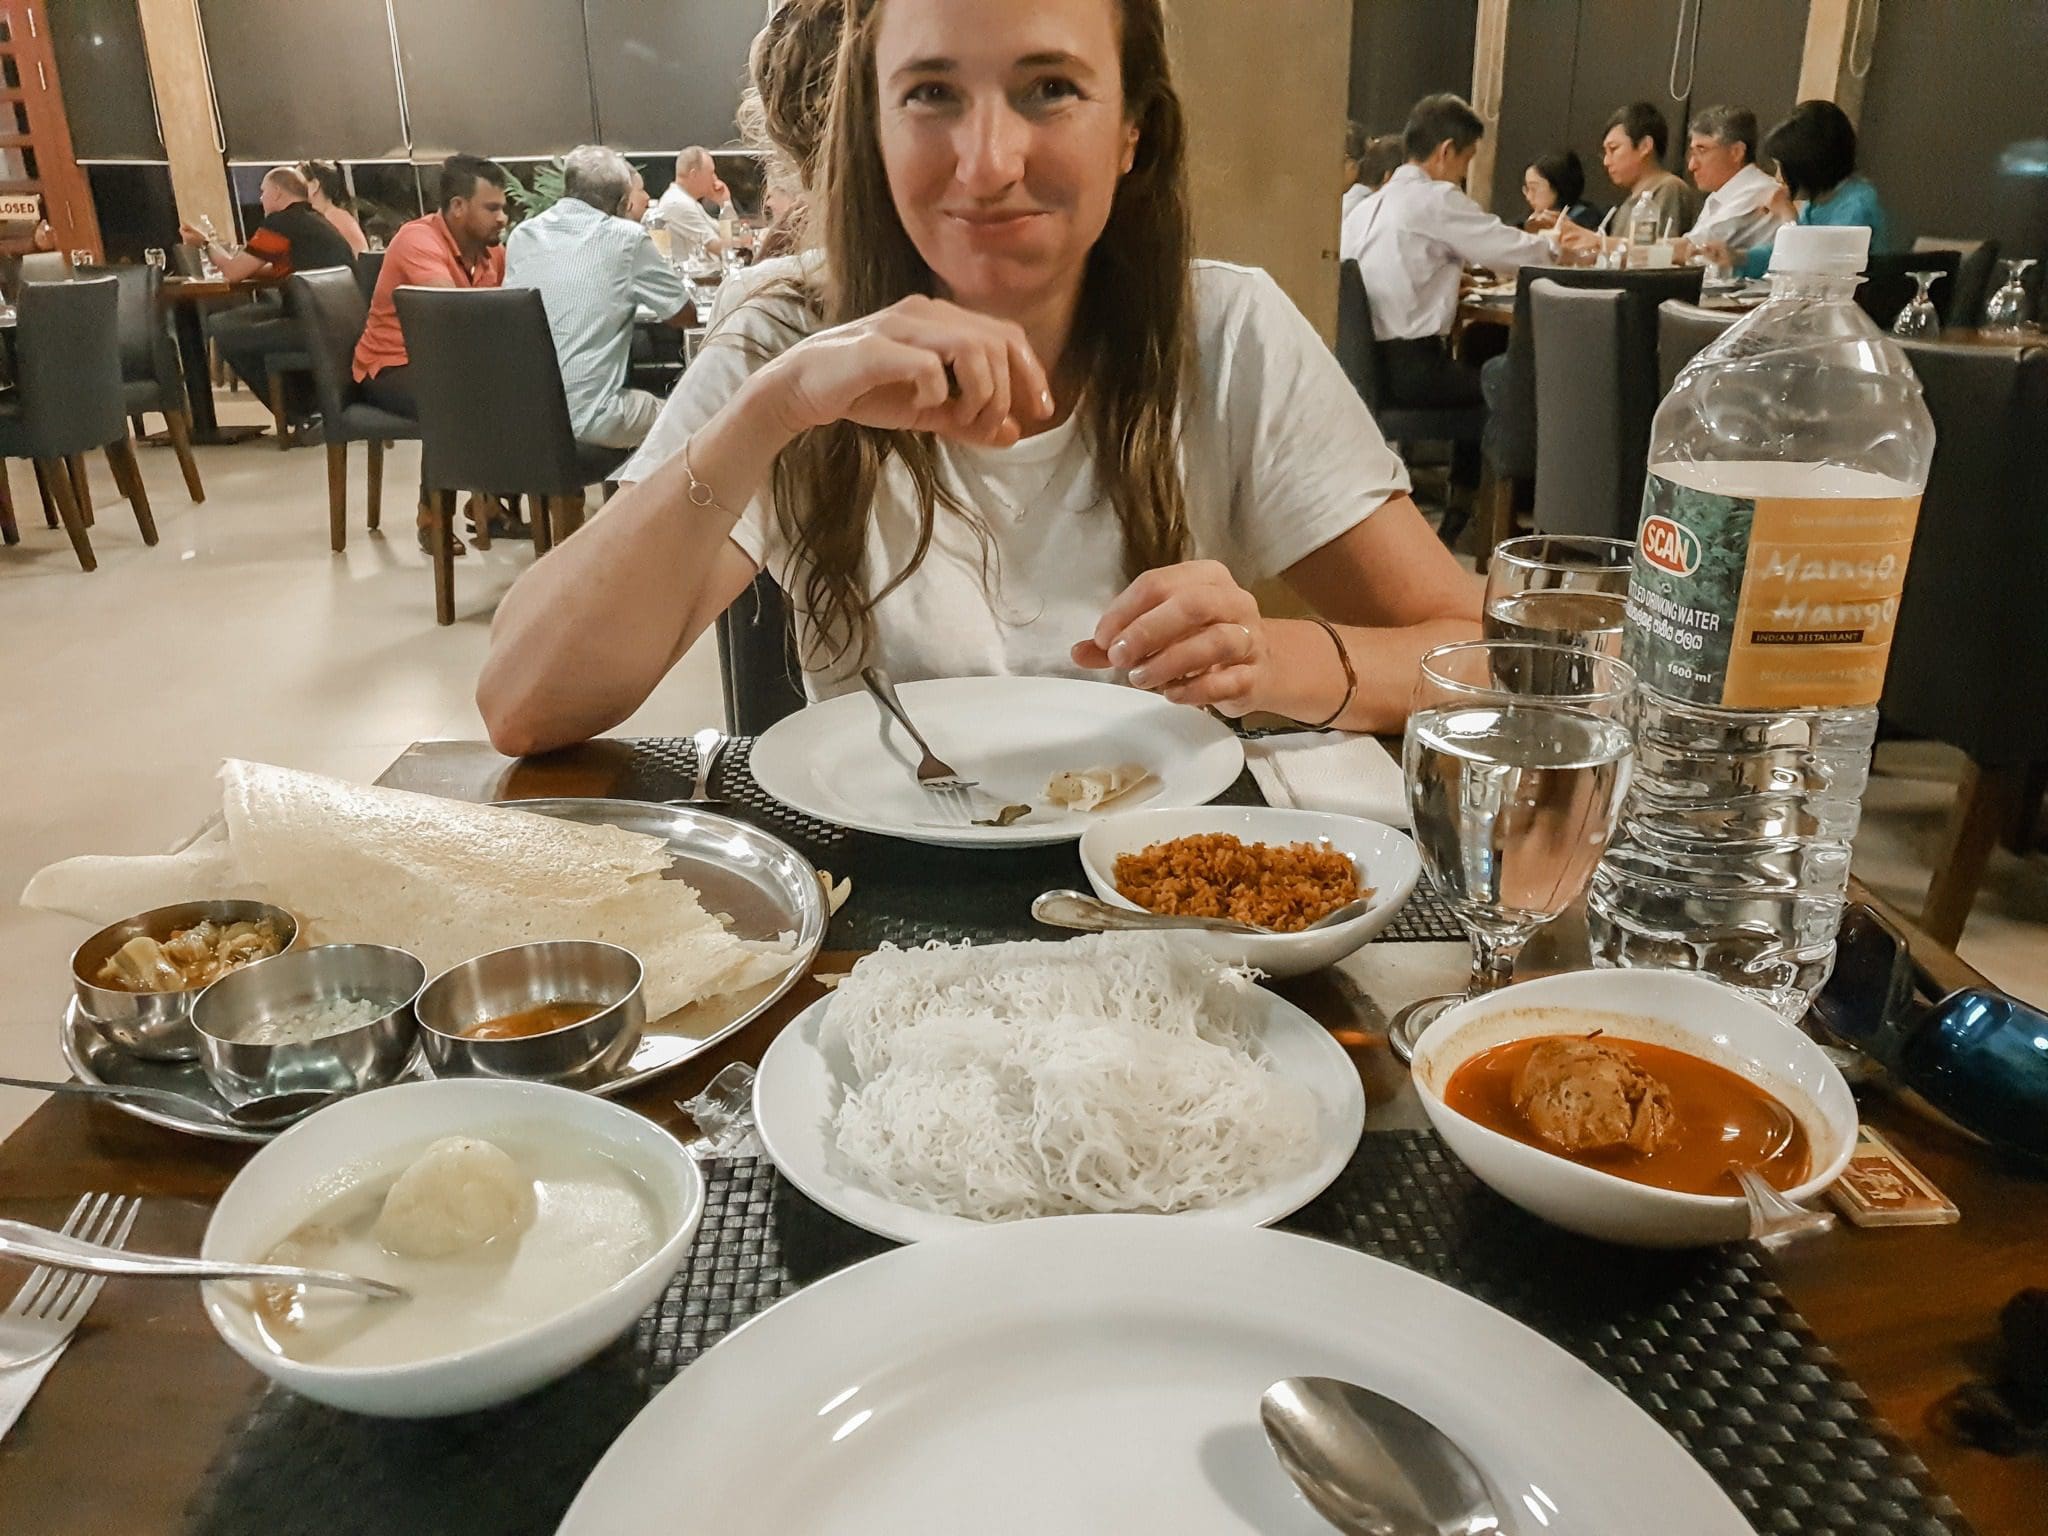 Enjoying a delicious curry!